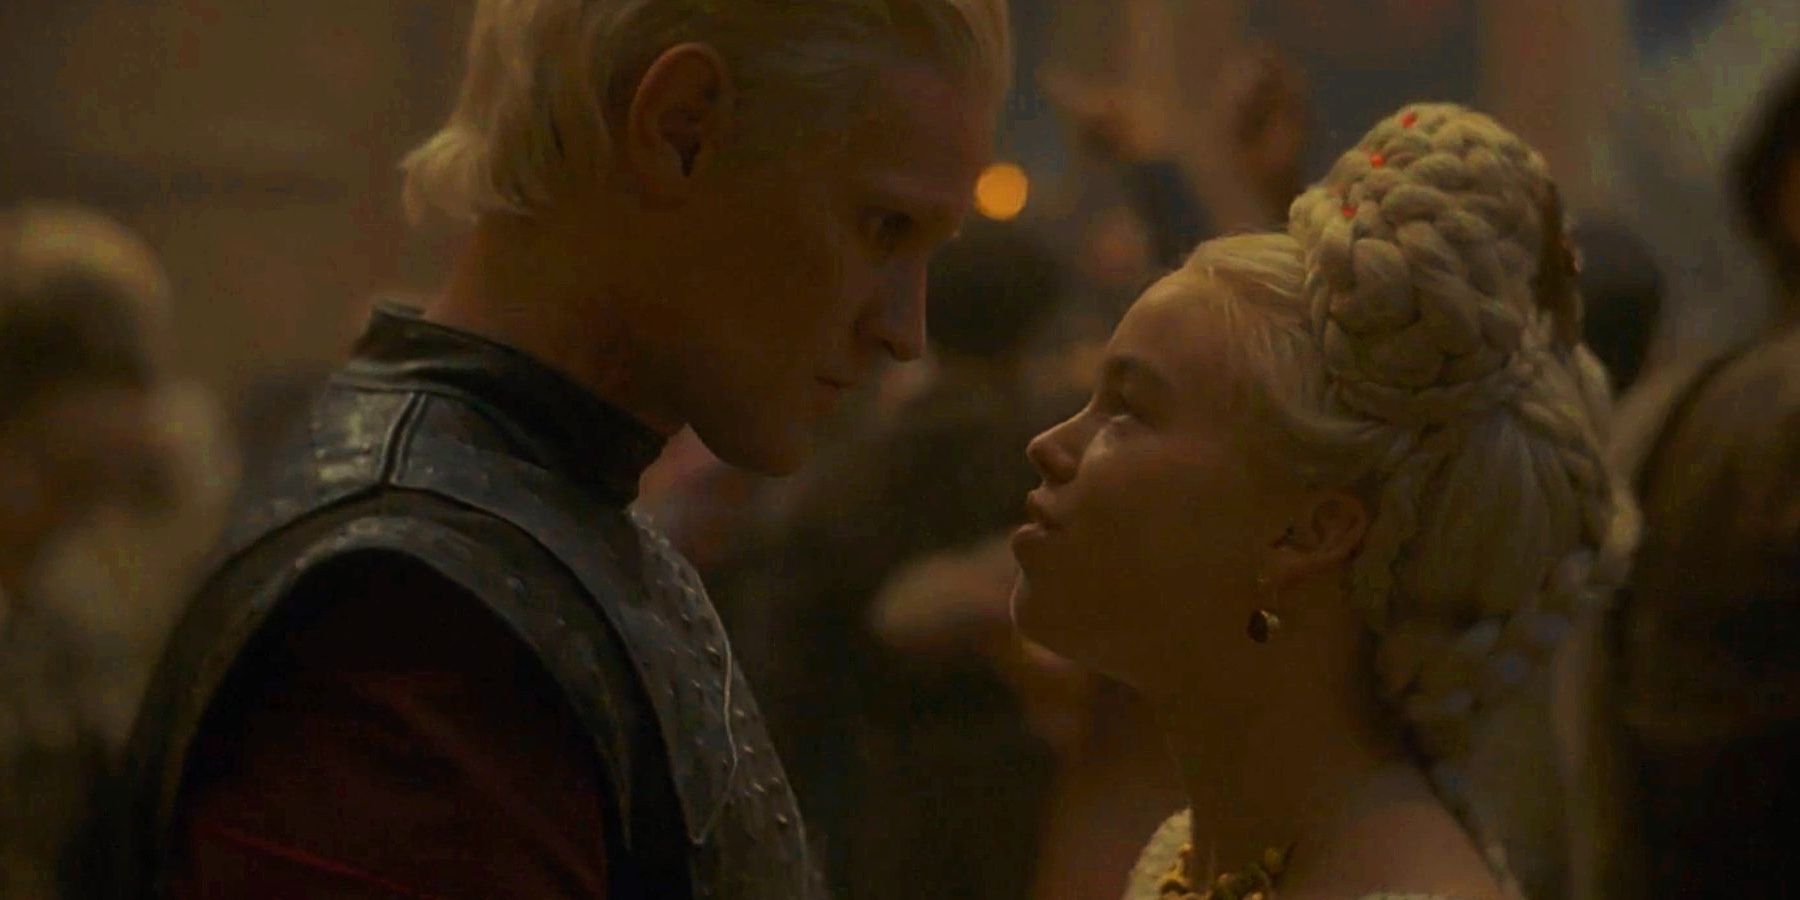 Rhaenyra and Daemon Targaryen at her wedding in House of the Dragon episode 5